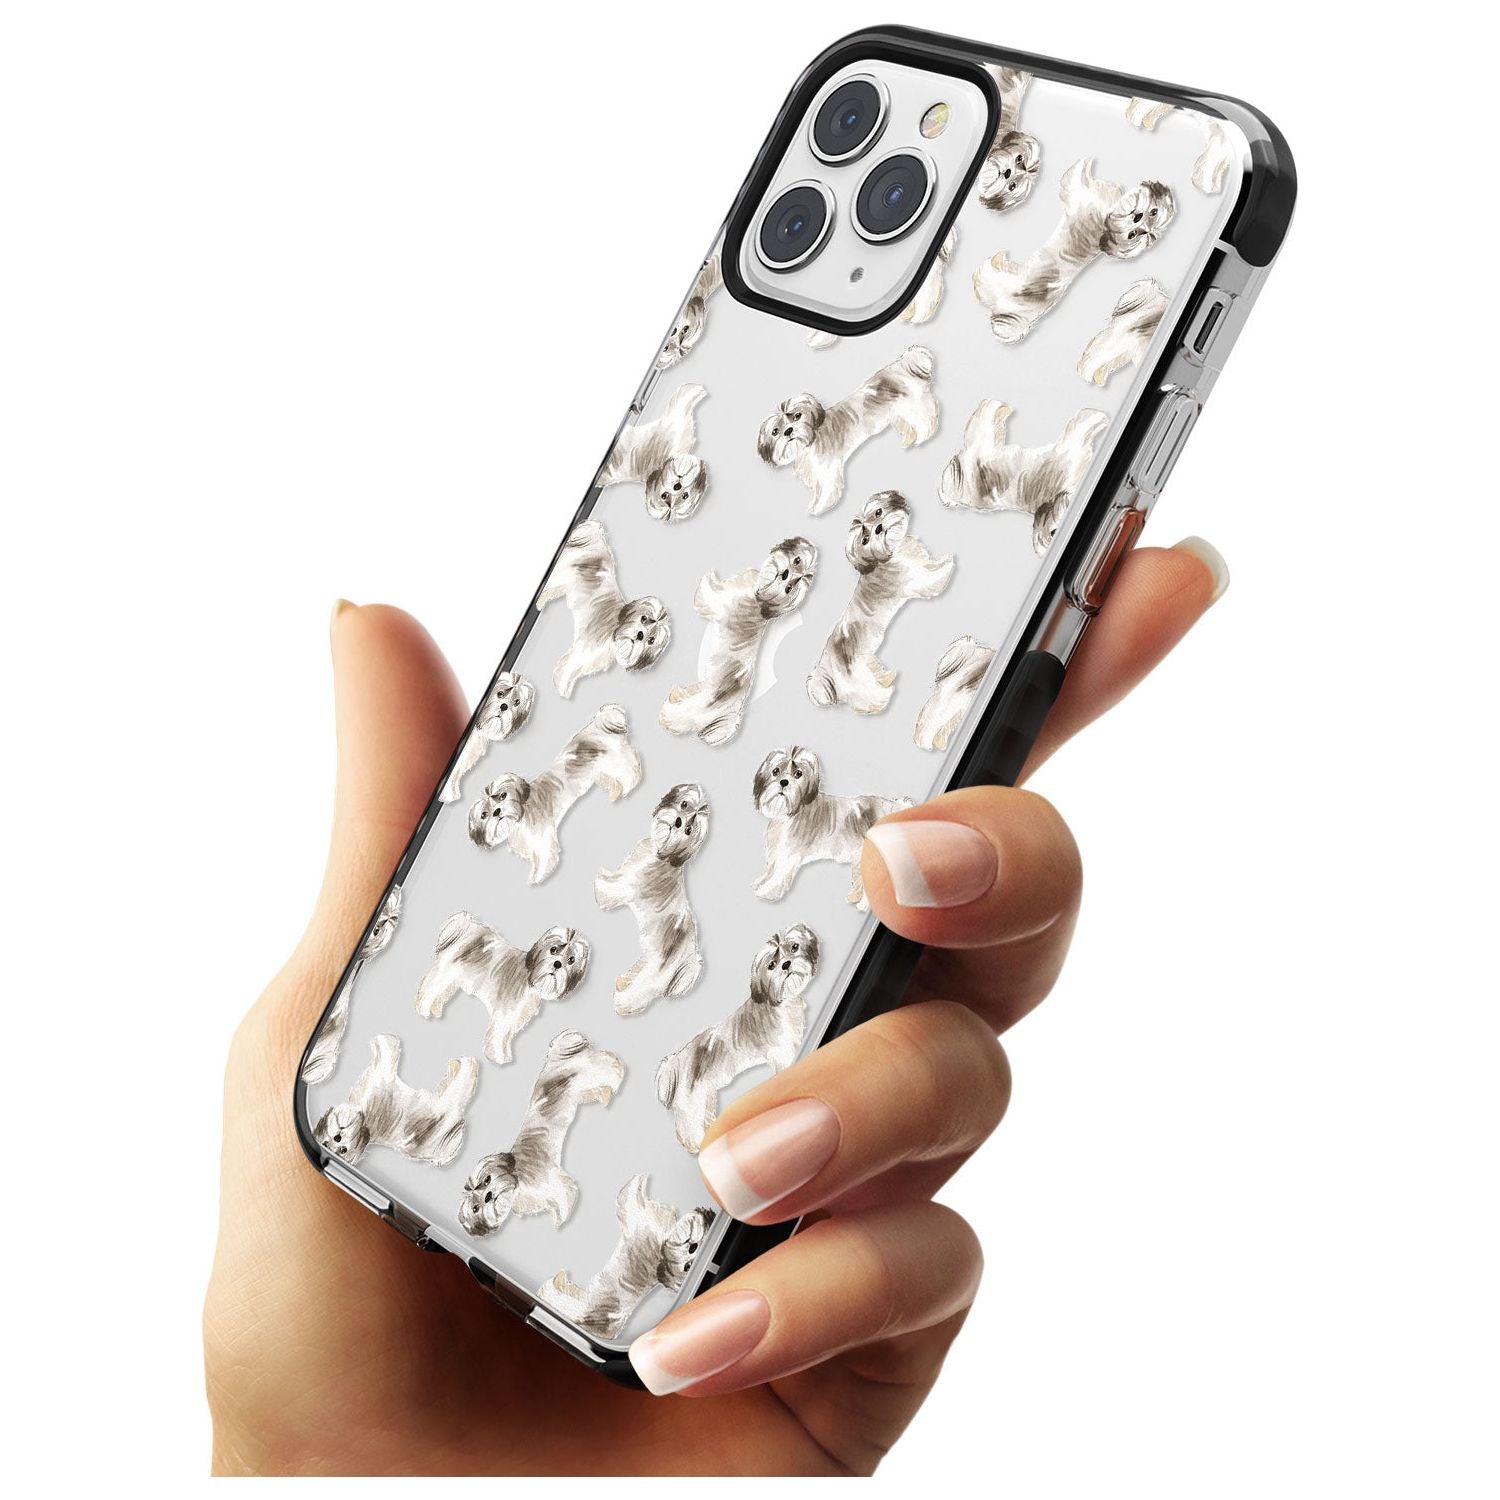 Shih tzu (Short Hair) Watercolour Dog Pattern Black Impact Phone Case for iPhone 11 Pro Max